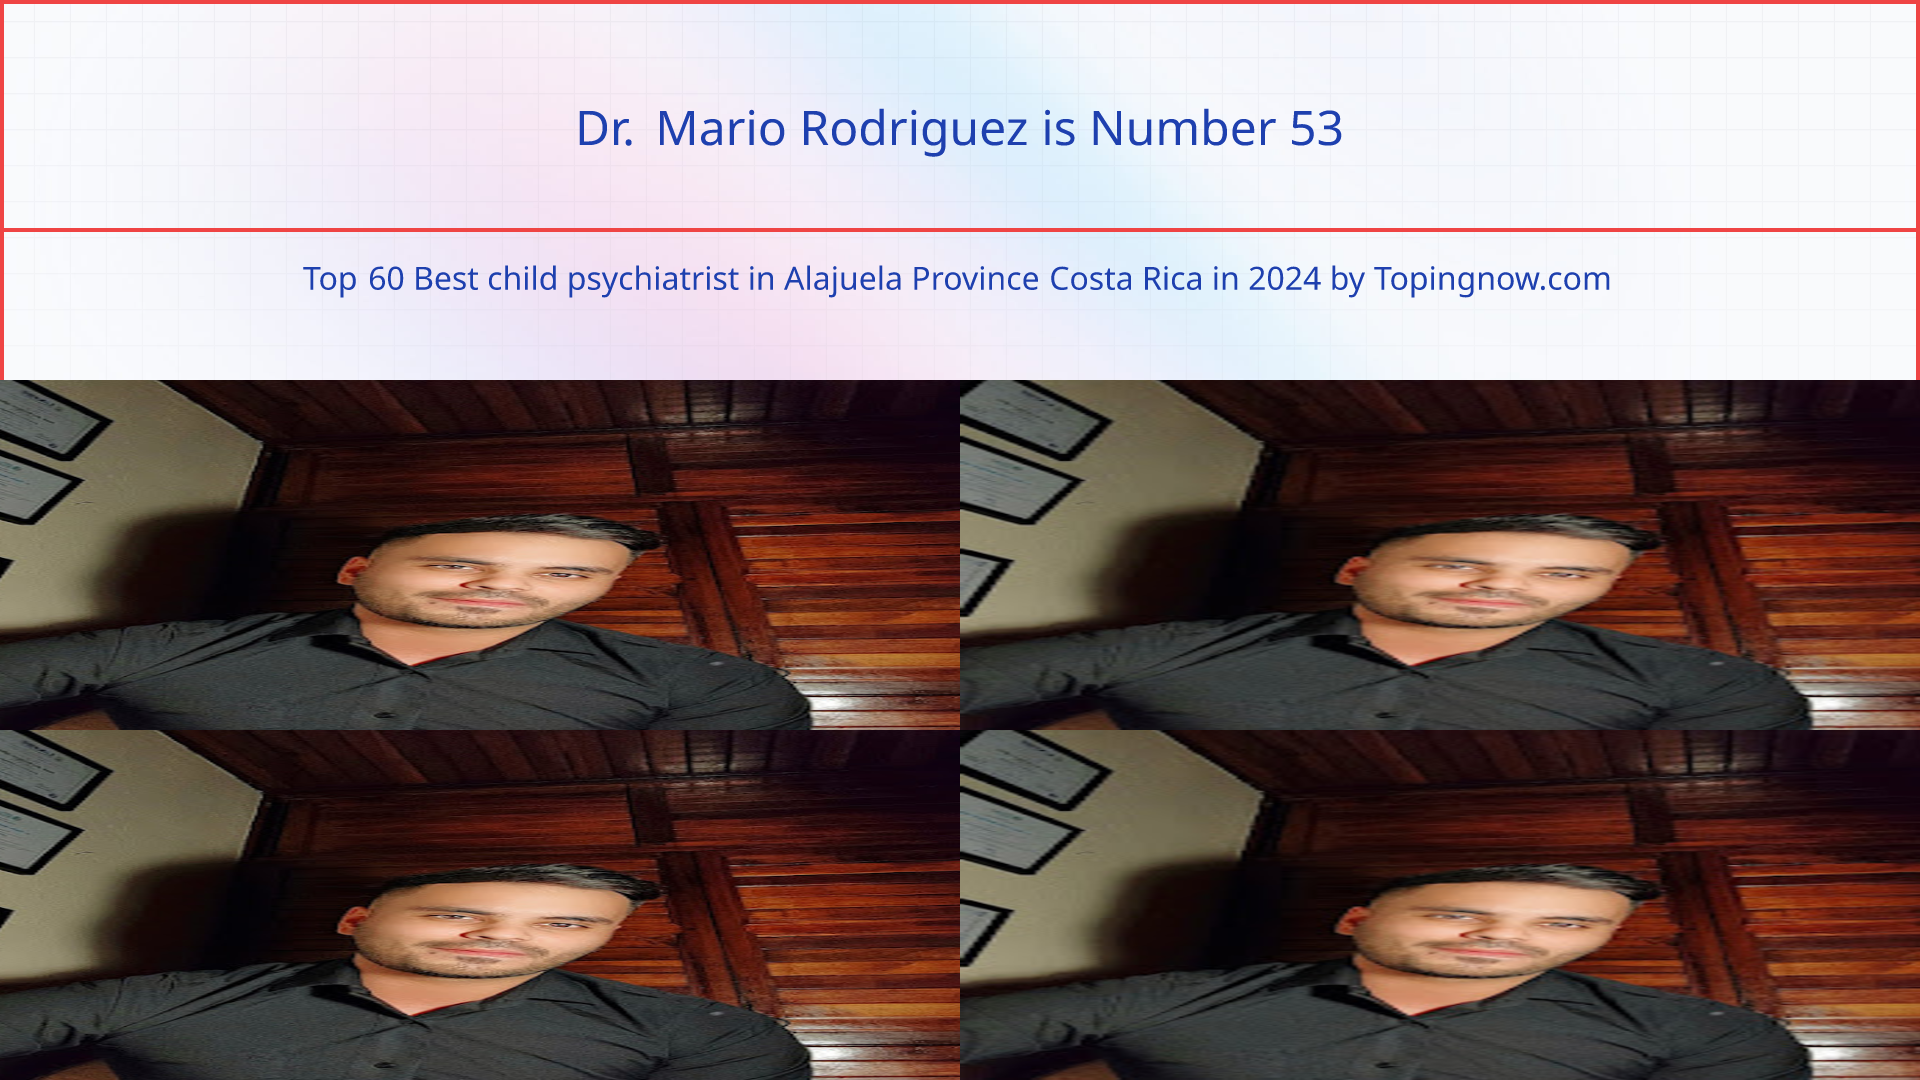 Dr. Mario Rodriguez: Top 60 Best child psychiatrist in Alajuela Province Costa Rica in 2024